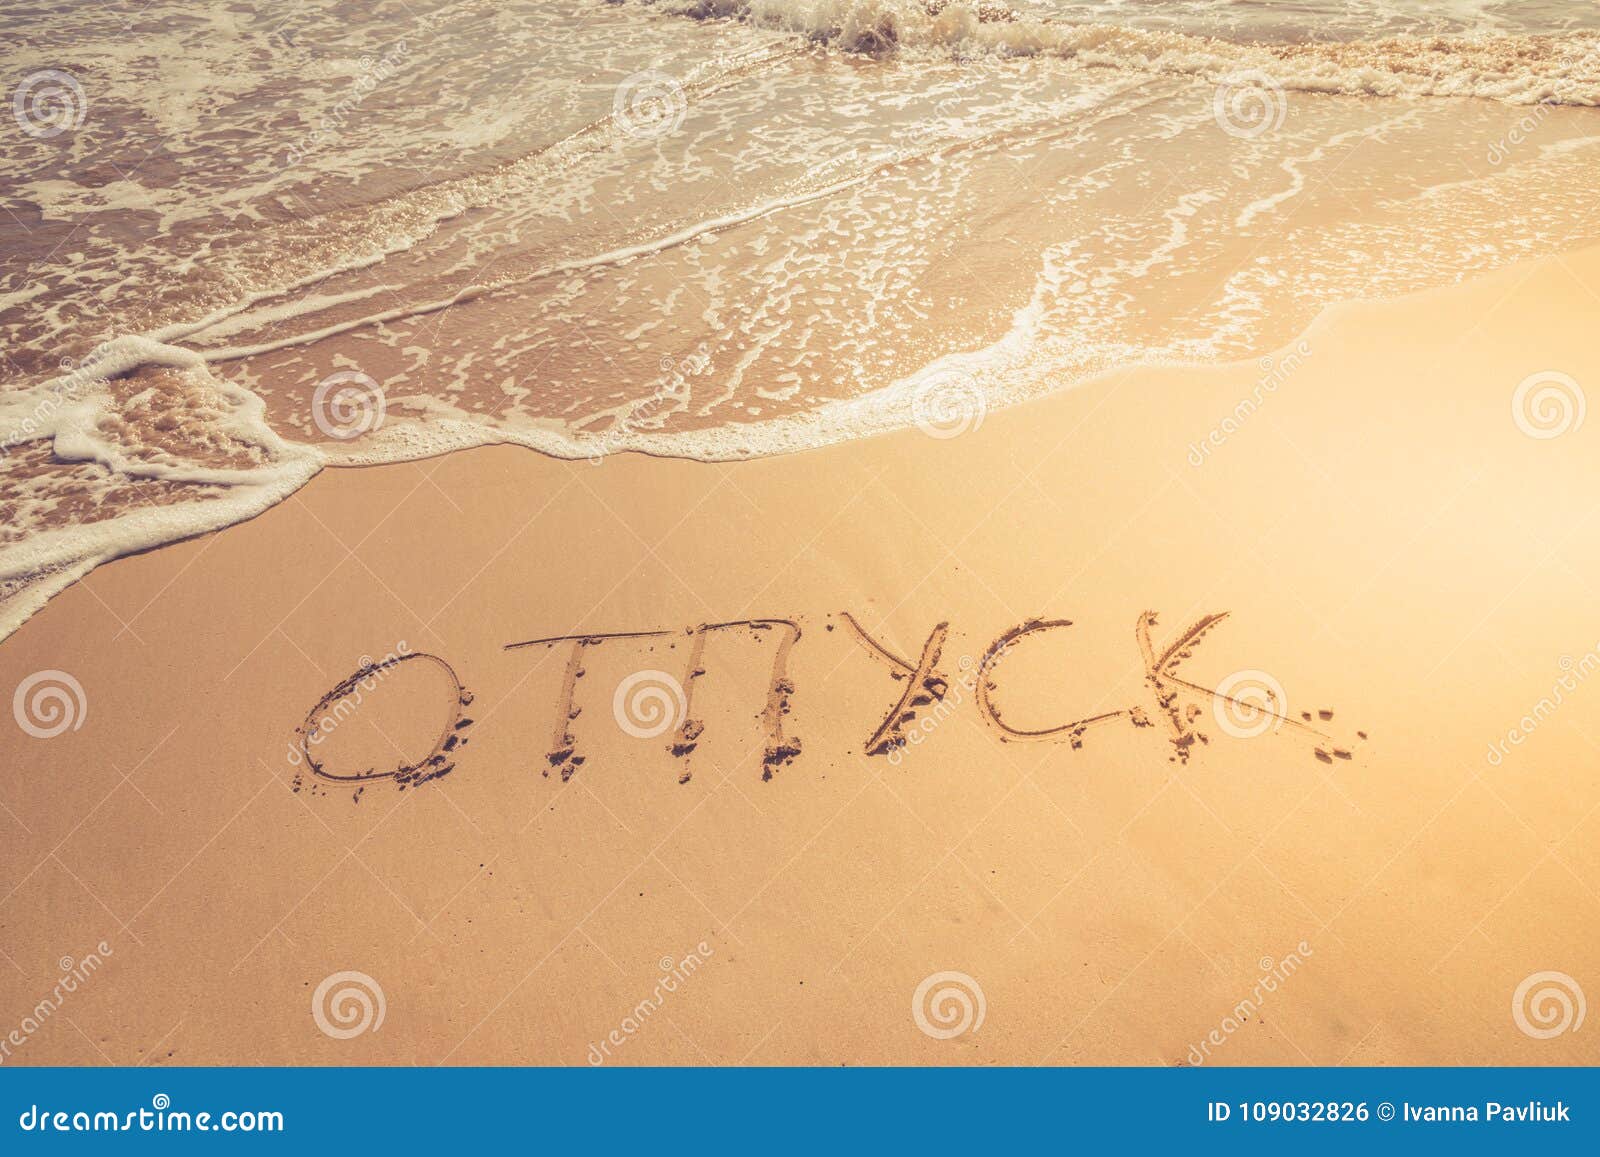 Дно картинки надпись. Отпуск надпись на песке. Отпуск надпись на песке море. Надпись на песке на море. 2021 Надпись на песке.